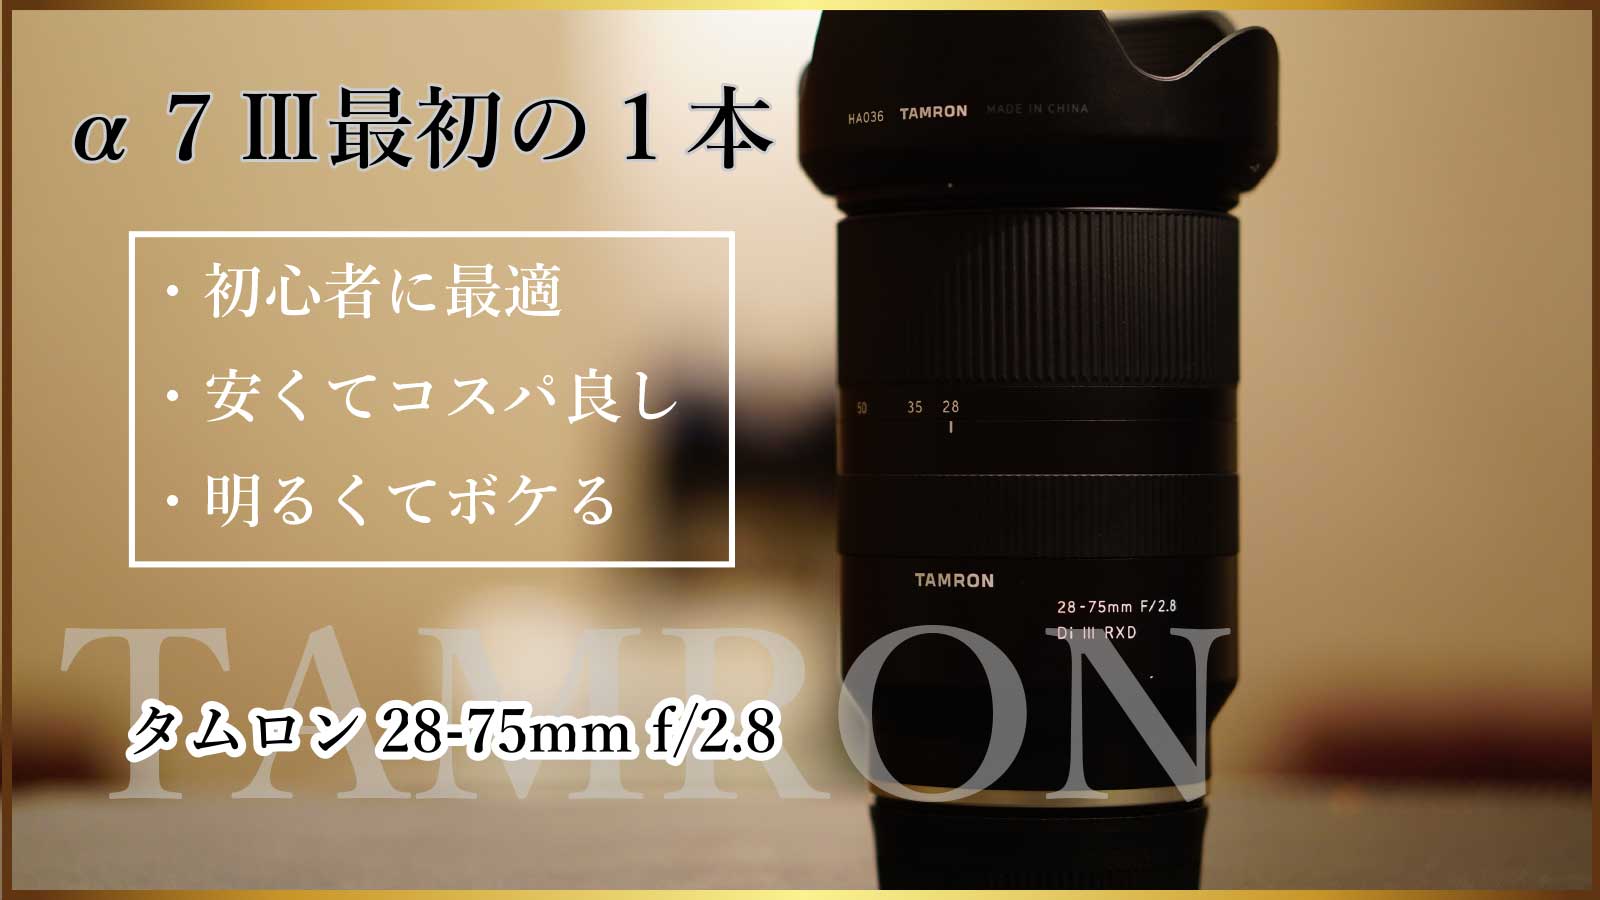 Sony α7III & TAMRON 28-75 f2.8